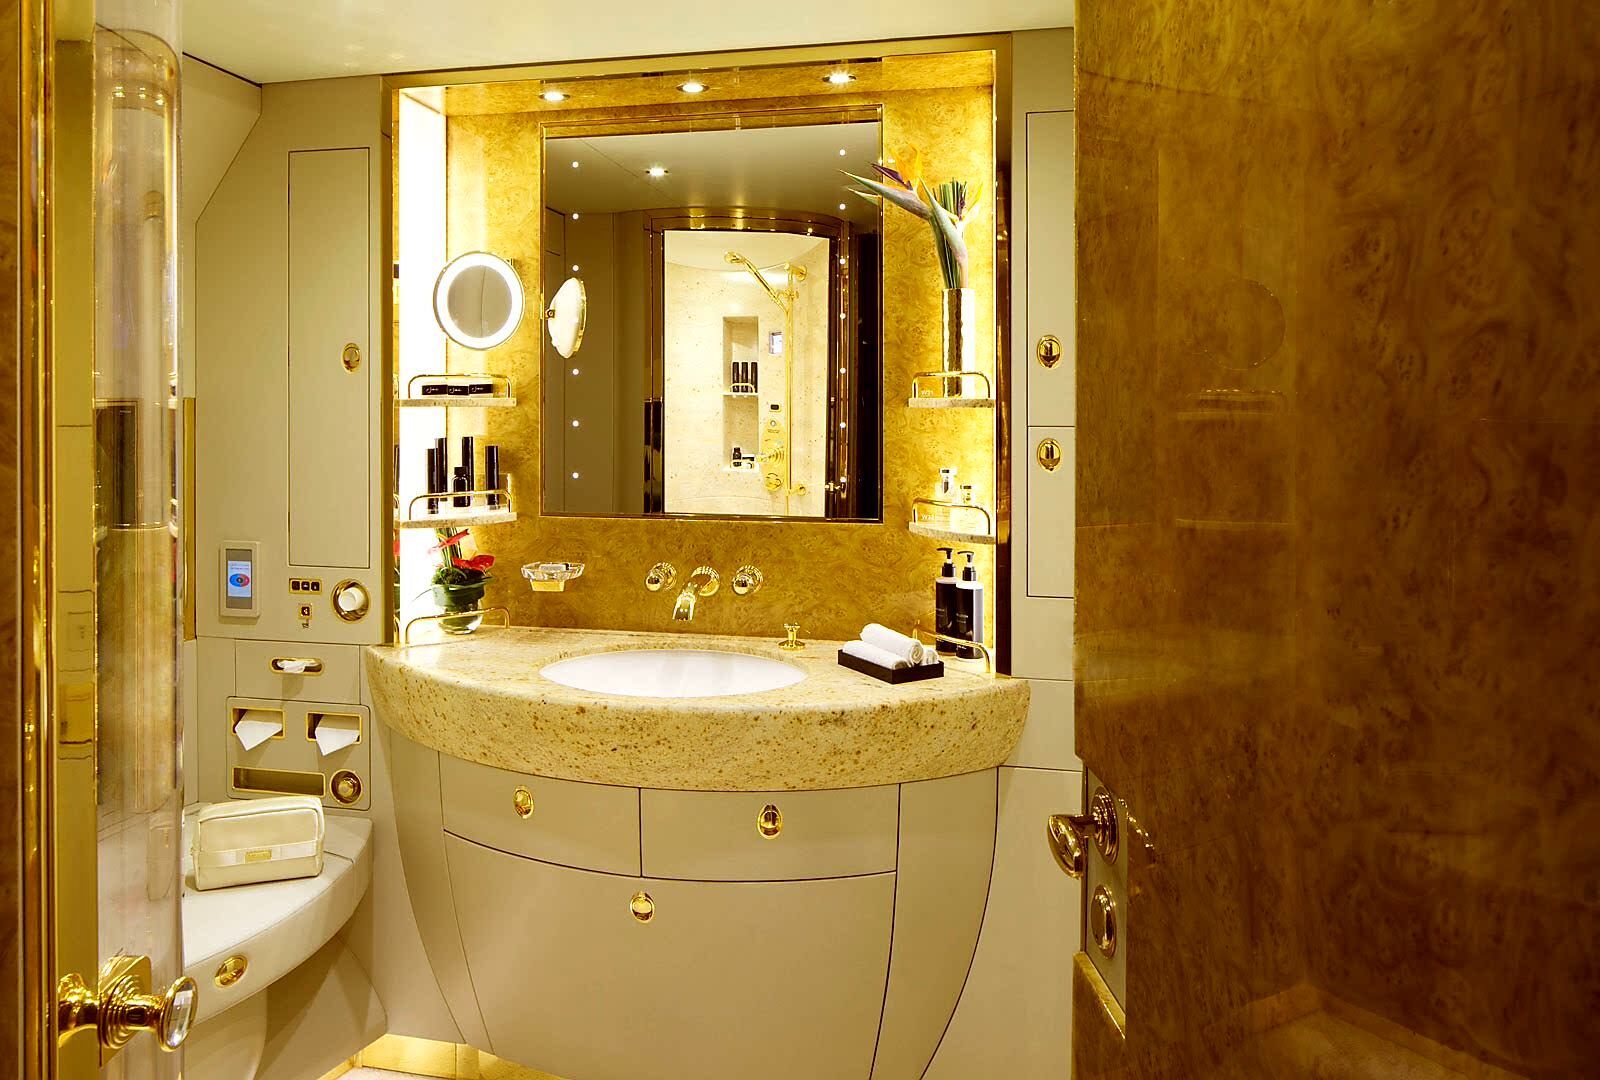 Emirates Bathroom ROAR Africa